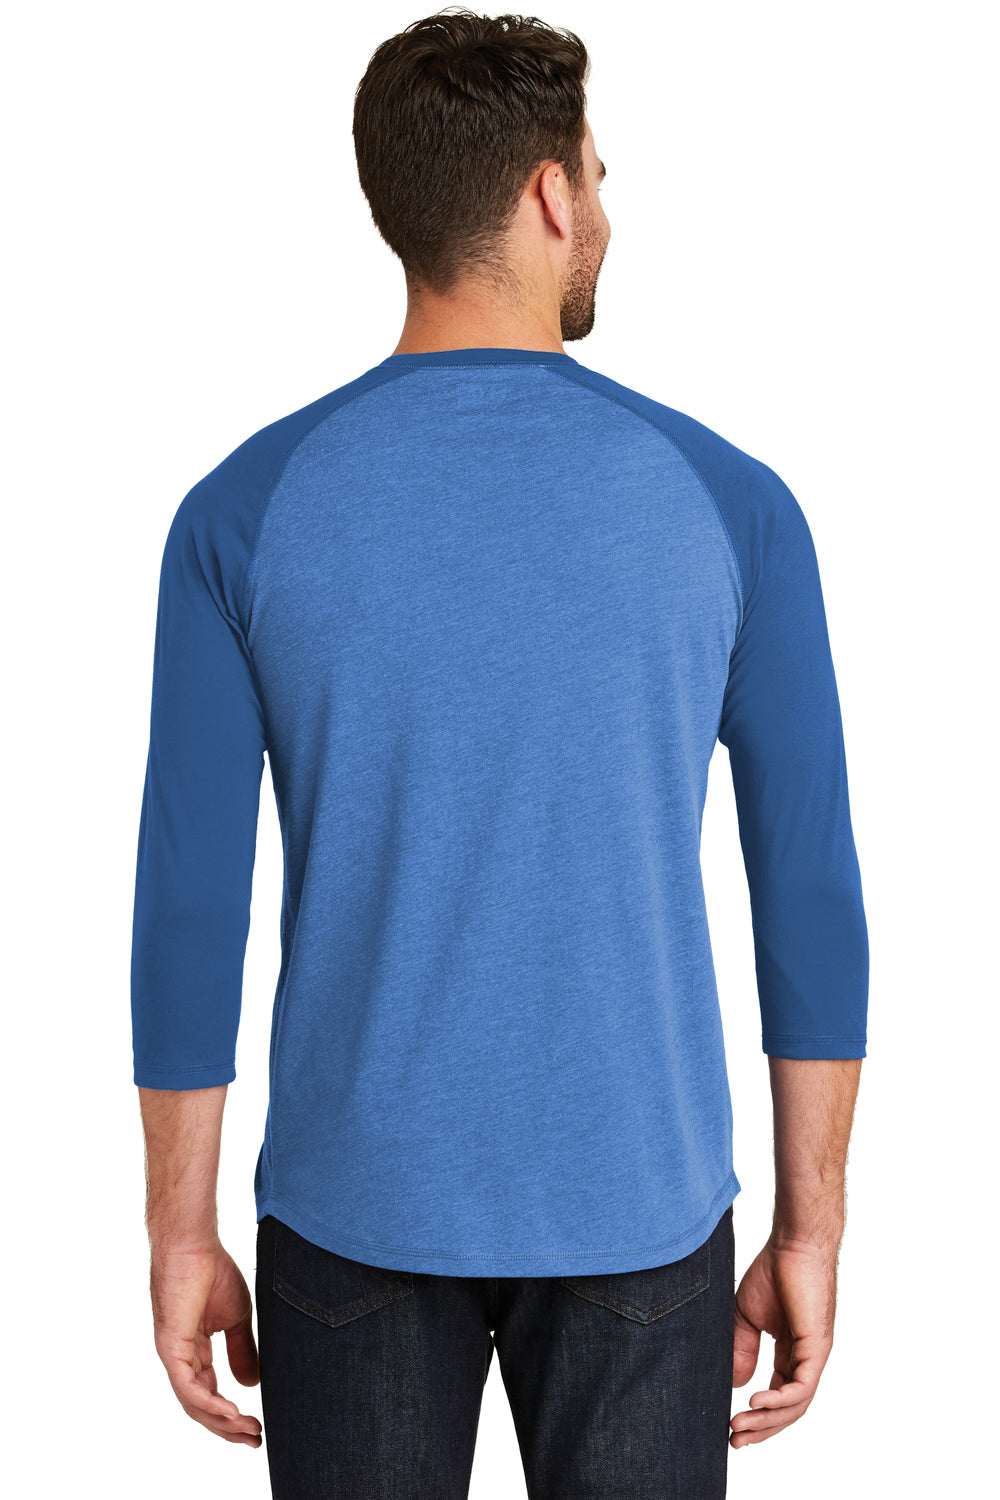 New Era NEA104 Mens Heritage 3/4 Sleeve Crewneck T-Shirt Royal Blue/Heather Royal Blue Back